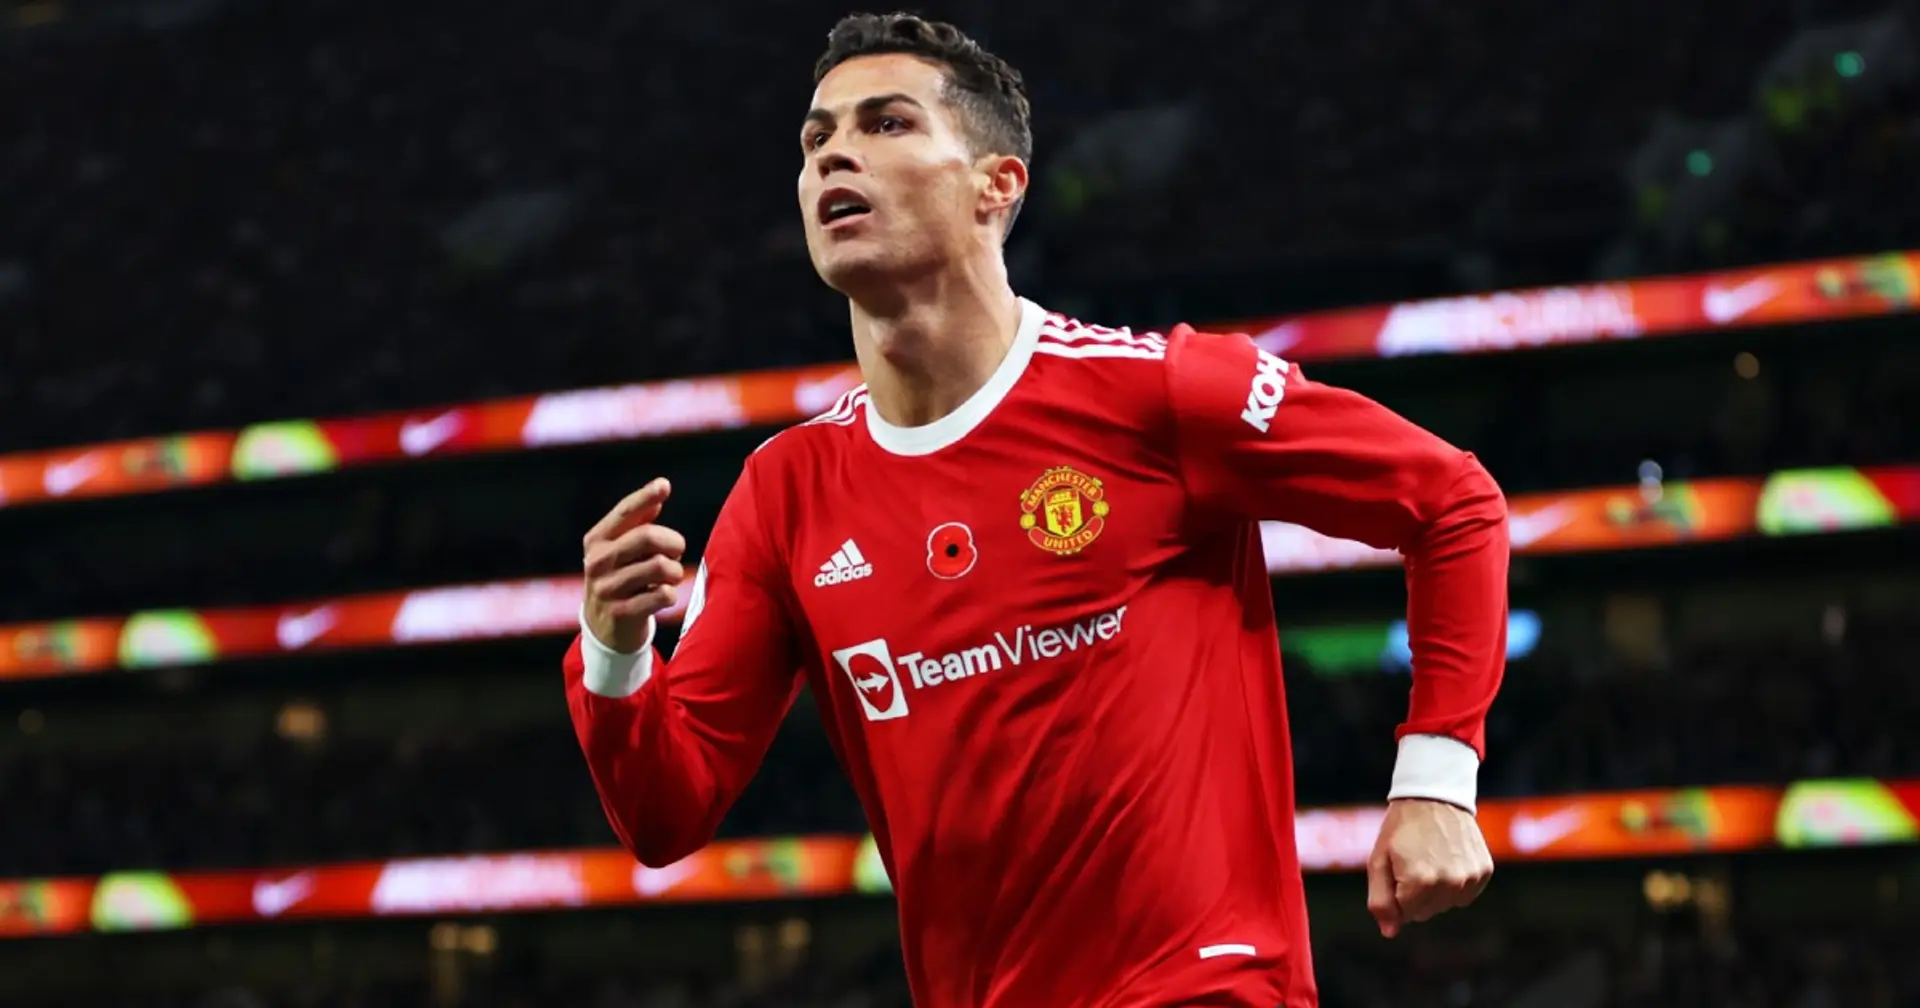 Chelsea considering move for Ronaldo (reliability: 5 stars)